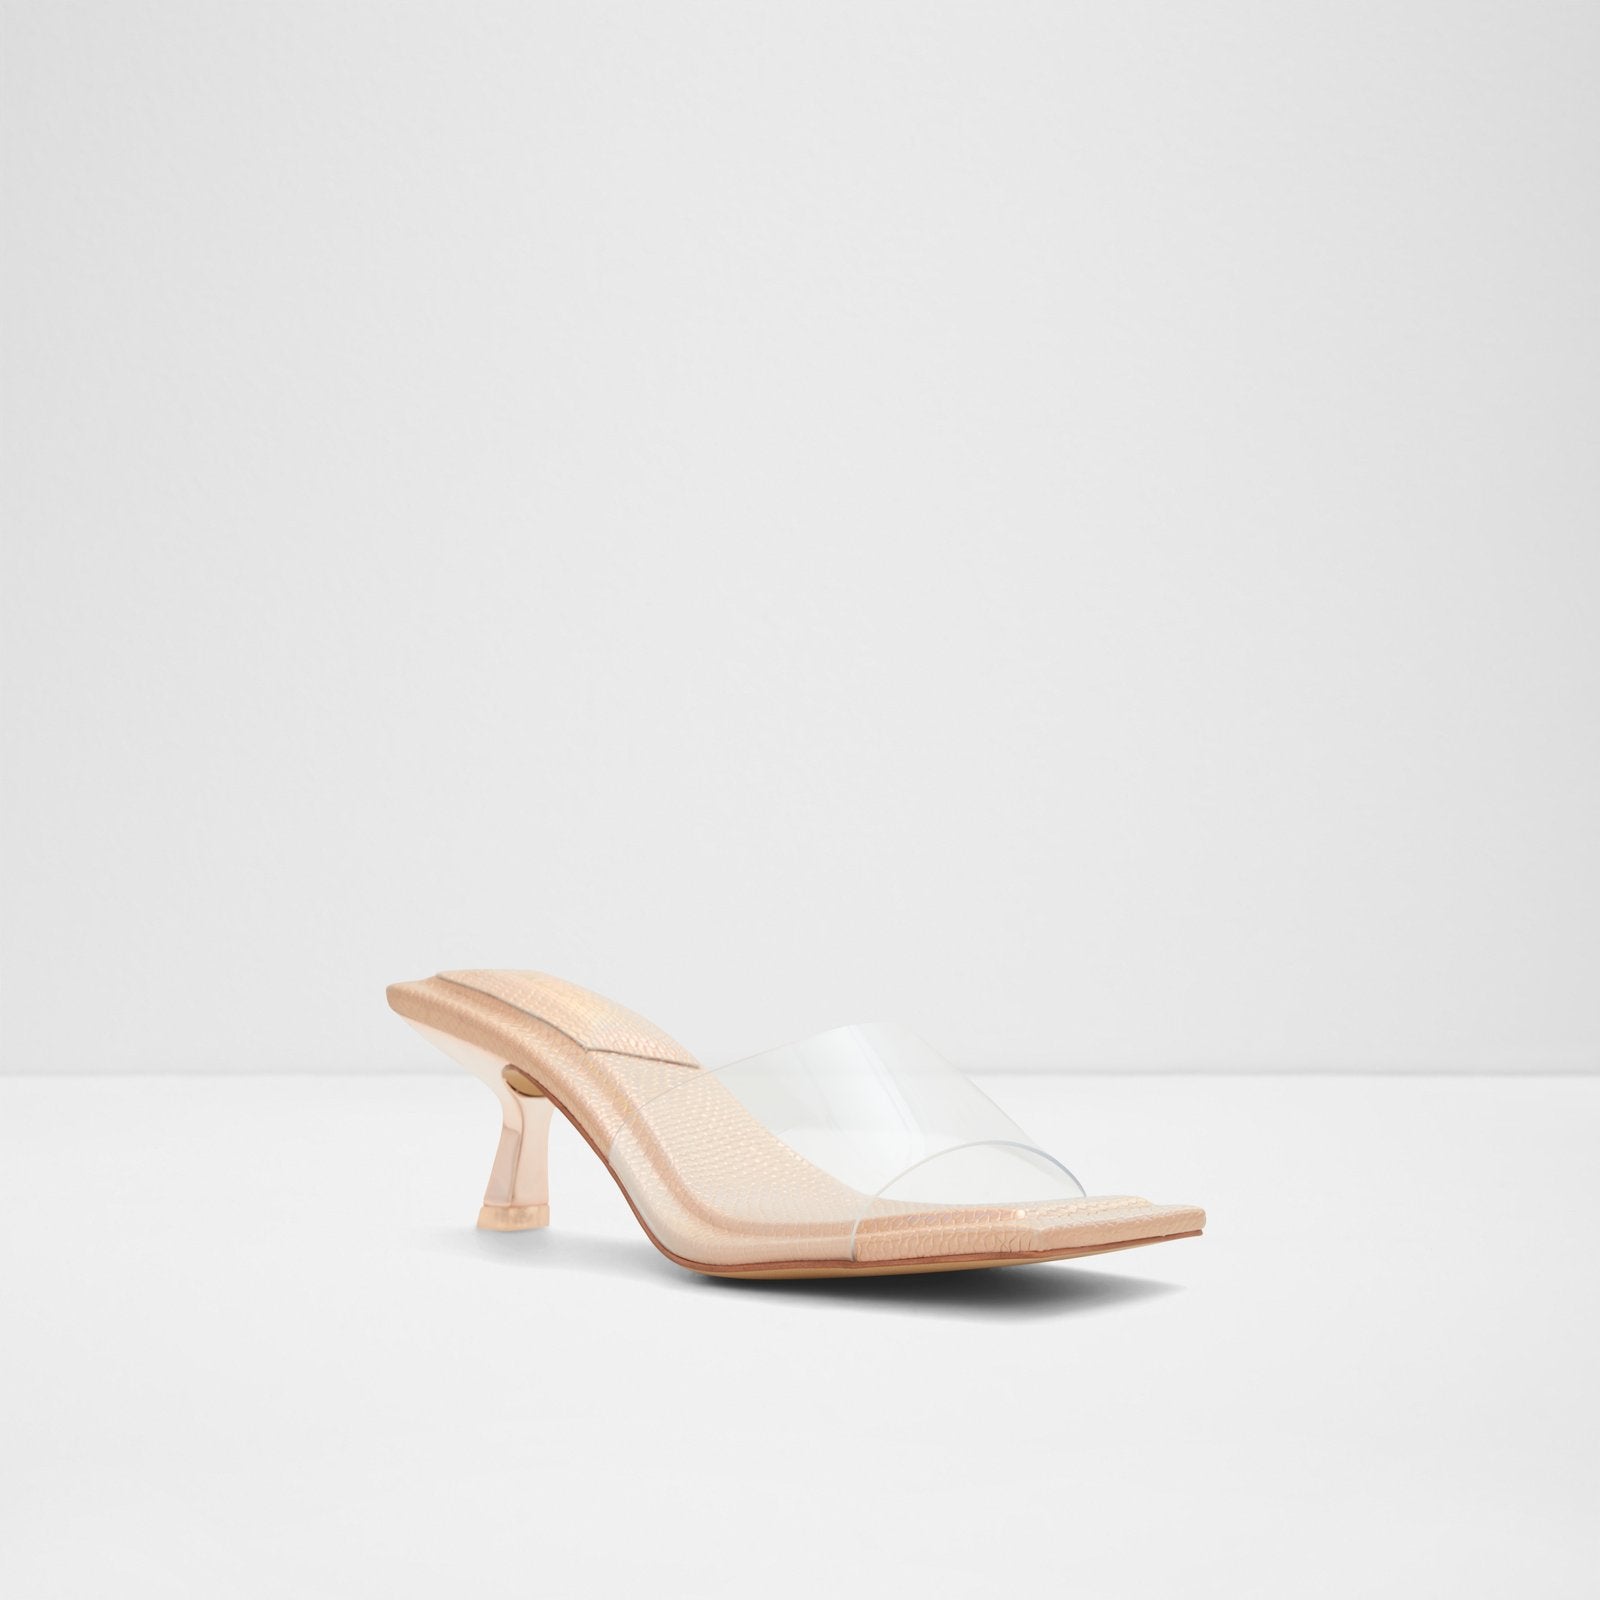 Cassilia / Heeled Sandals Women Shoes - Rose Gold - ALDO KSA